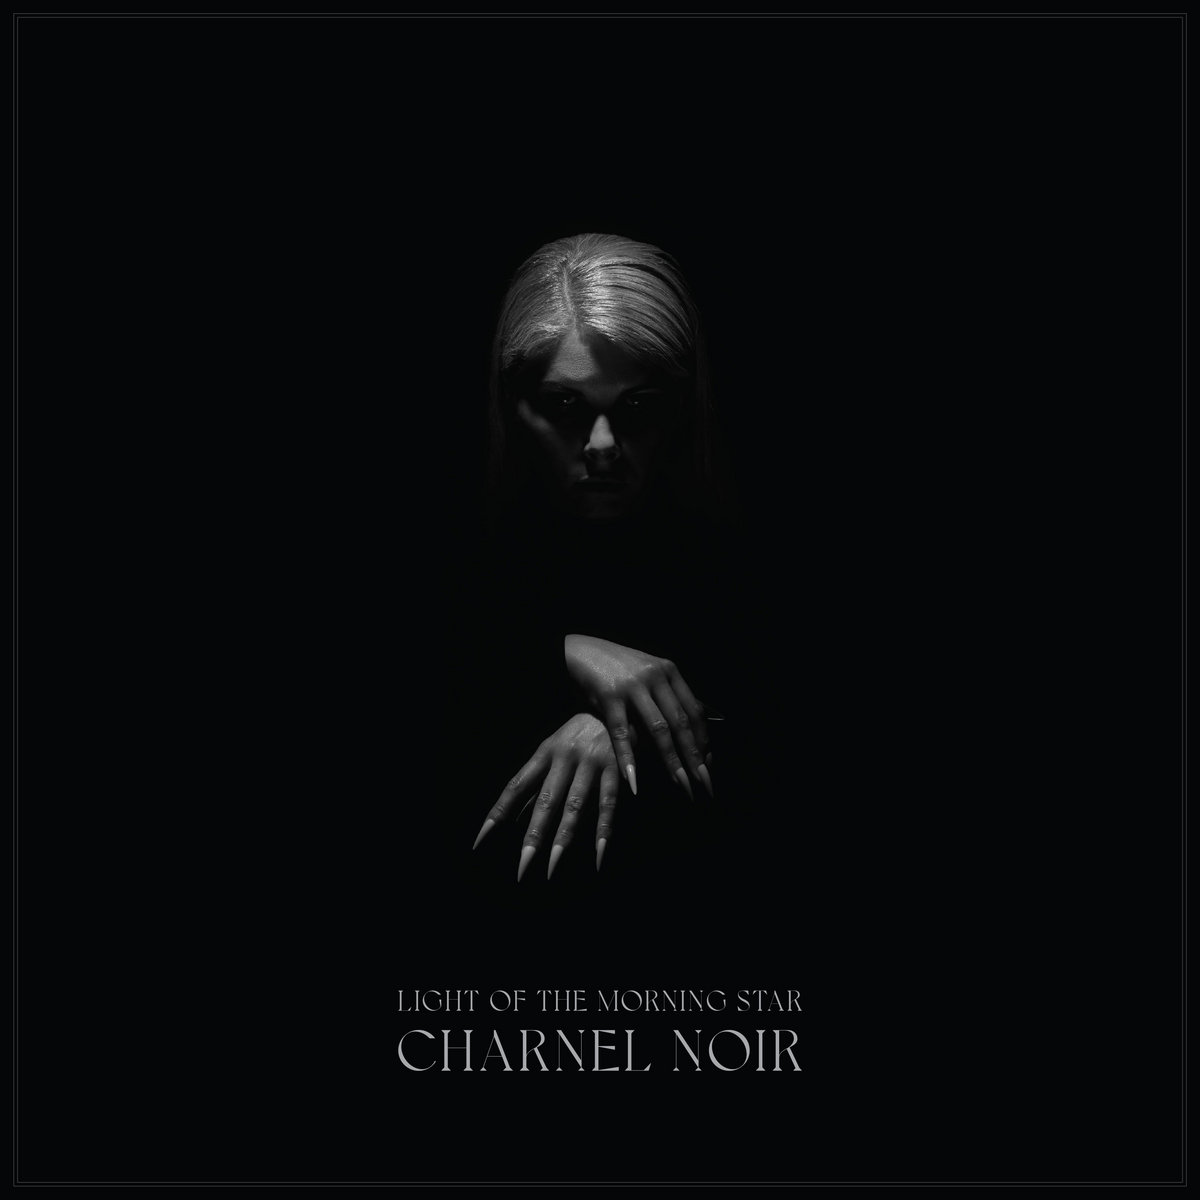 LIGHT OF THE MORNING STAR "Charnel Noir" - recenzja płyty